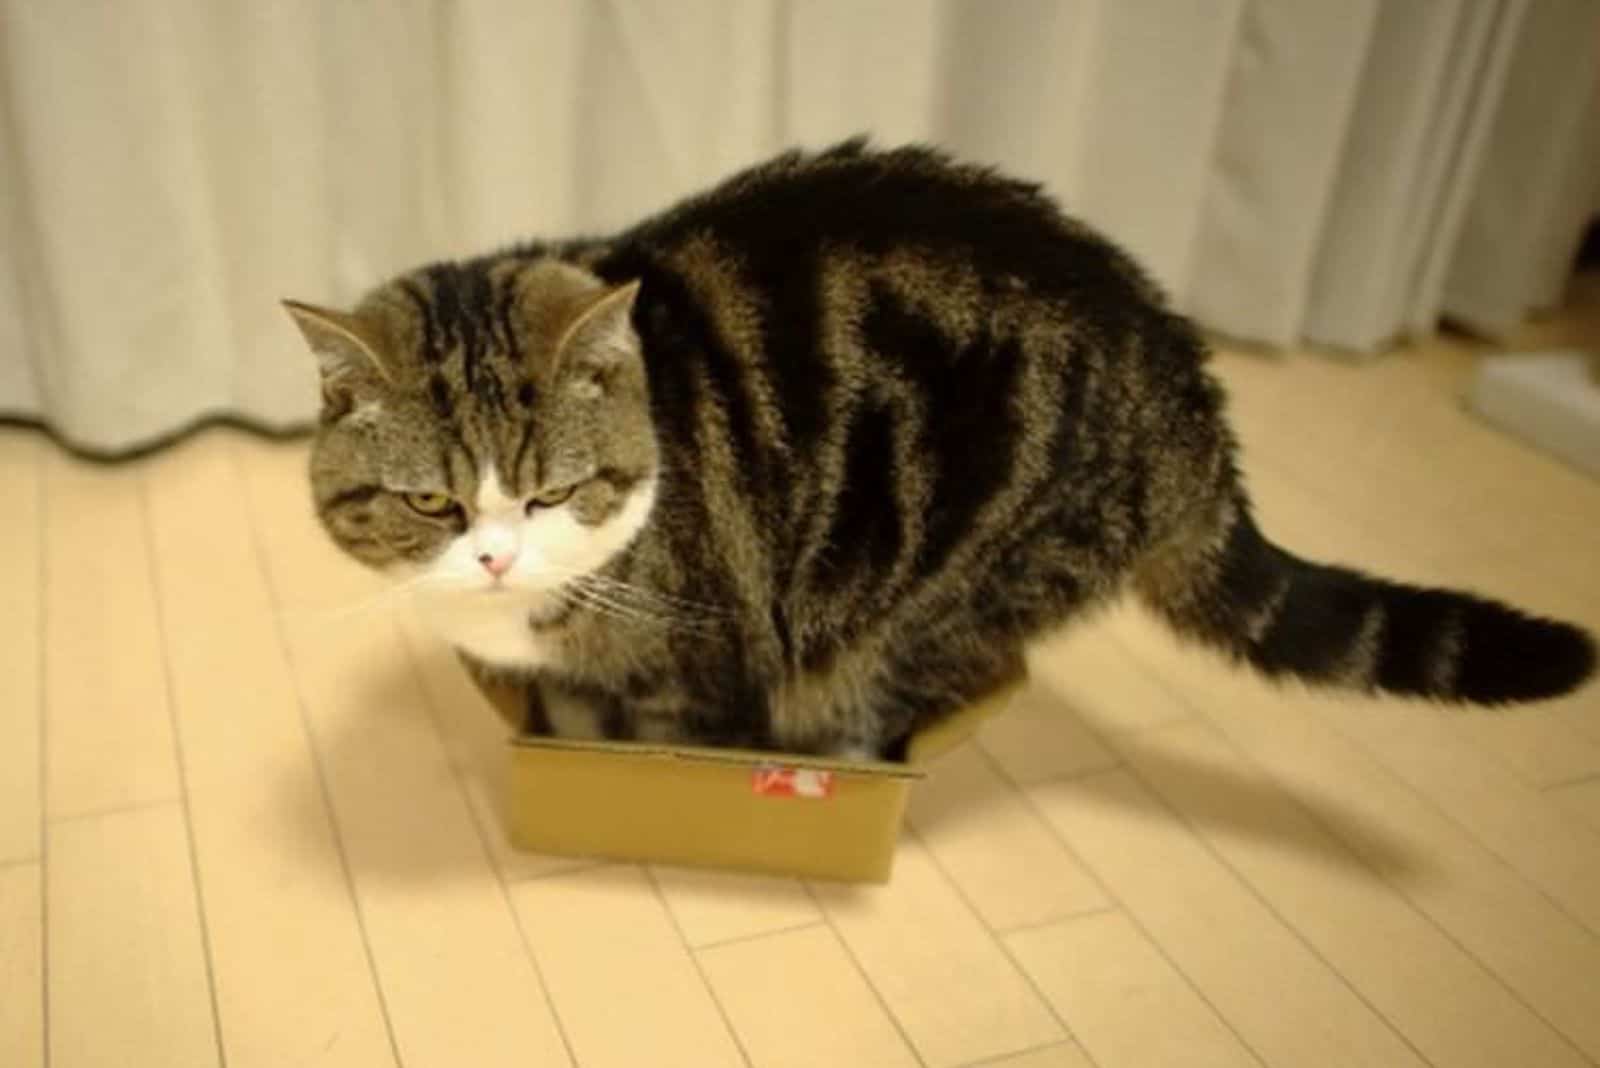 big grumpy cat in a small box